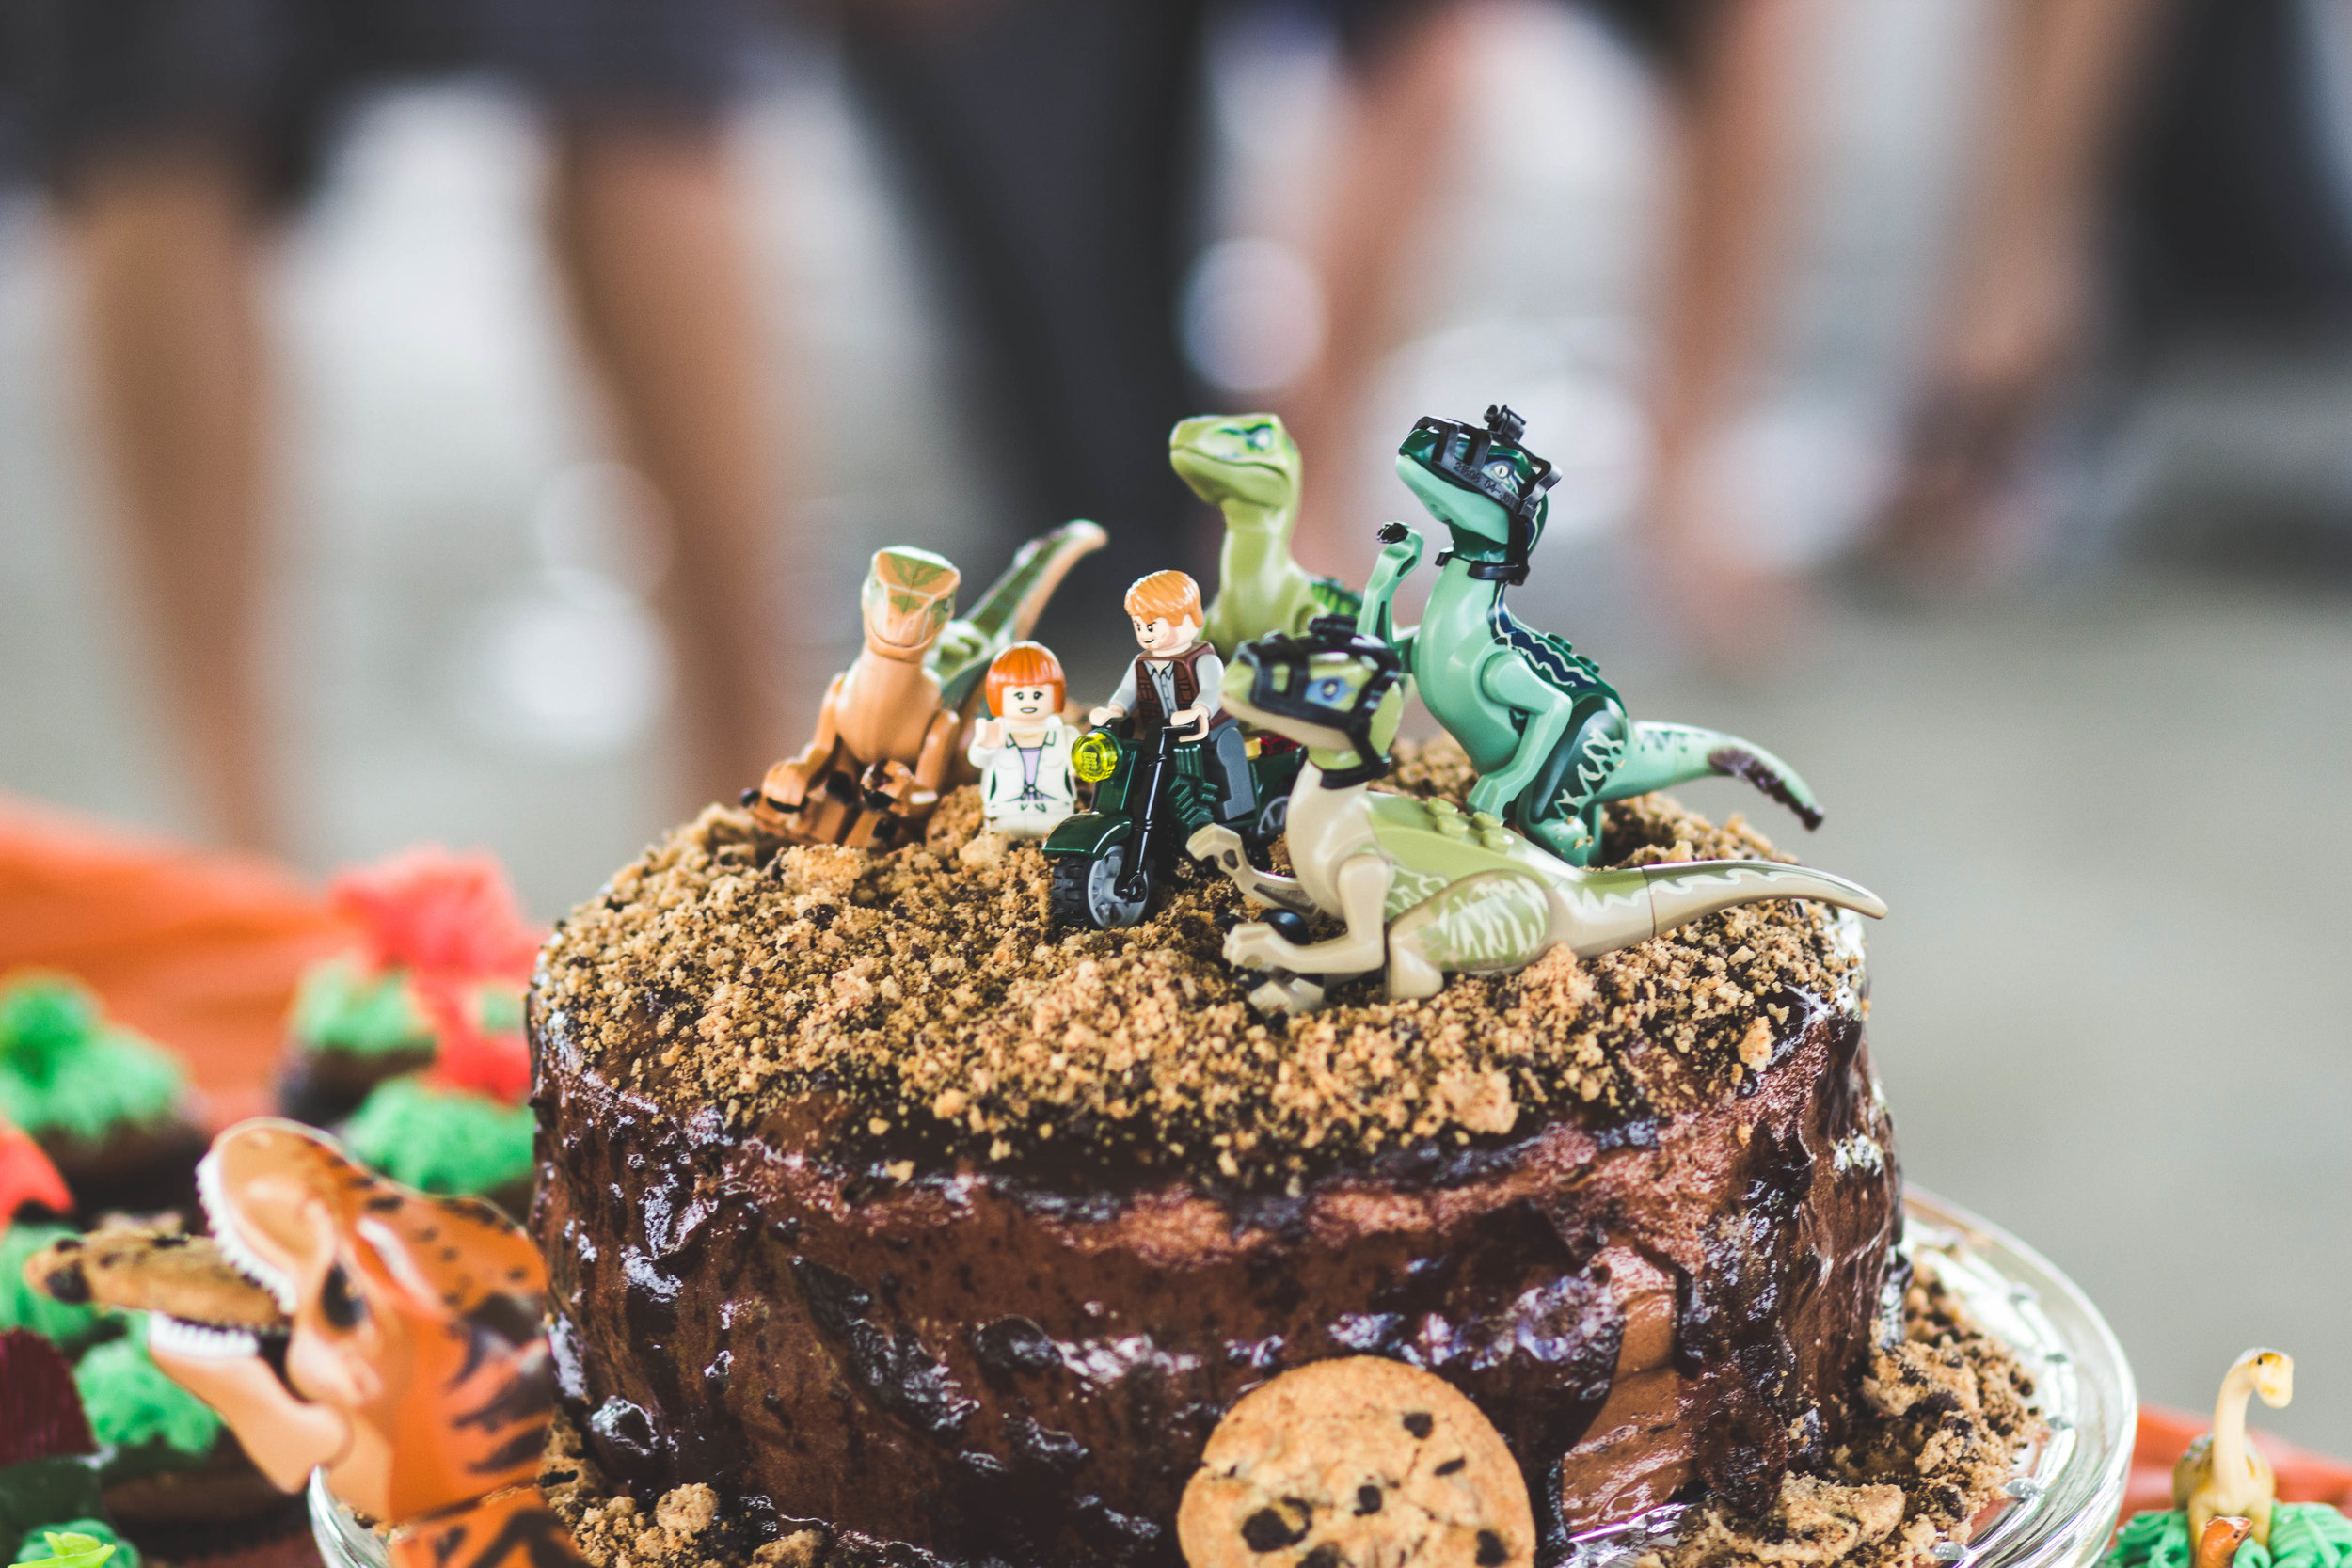 Jurassic World Cake. Check out dino party ideas on shopmkkm.com